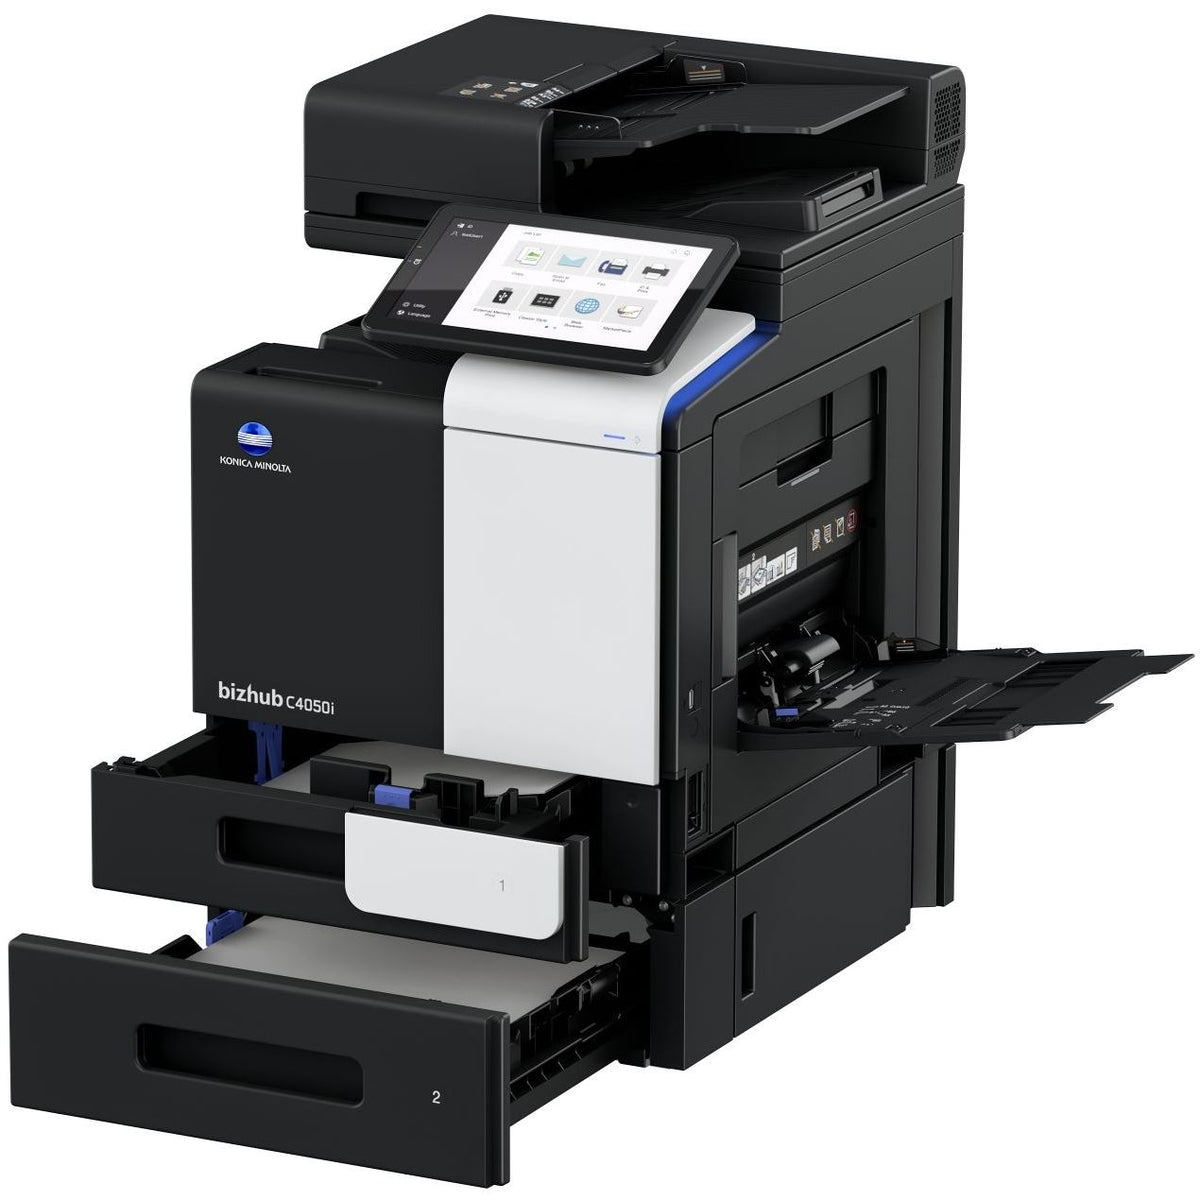 Konica Minolta bizhub C4050i A4 MFD.  Std print cntrllr and fax. 500 sheets &amp; 100-sheet bypass. Dual Scan-DF and duplex std.